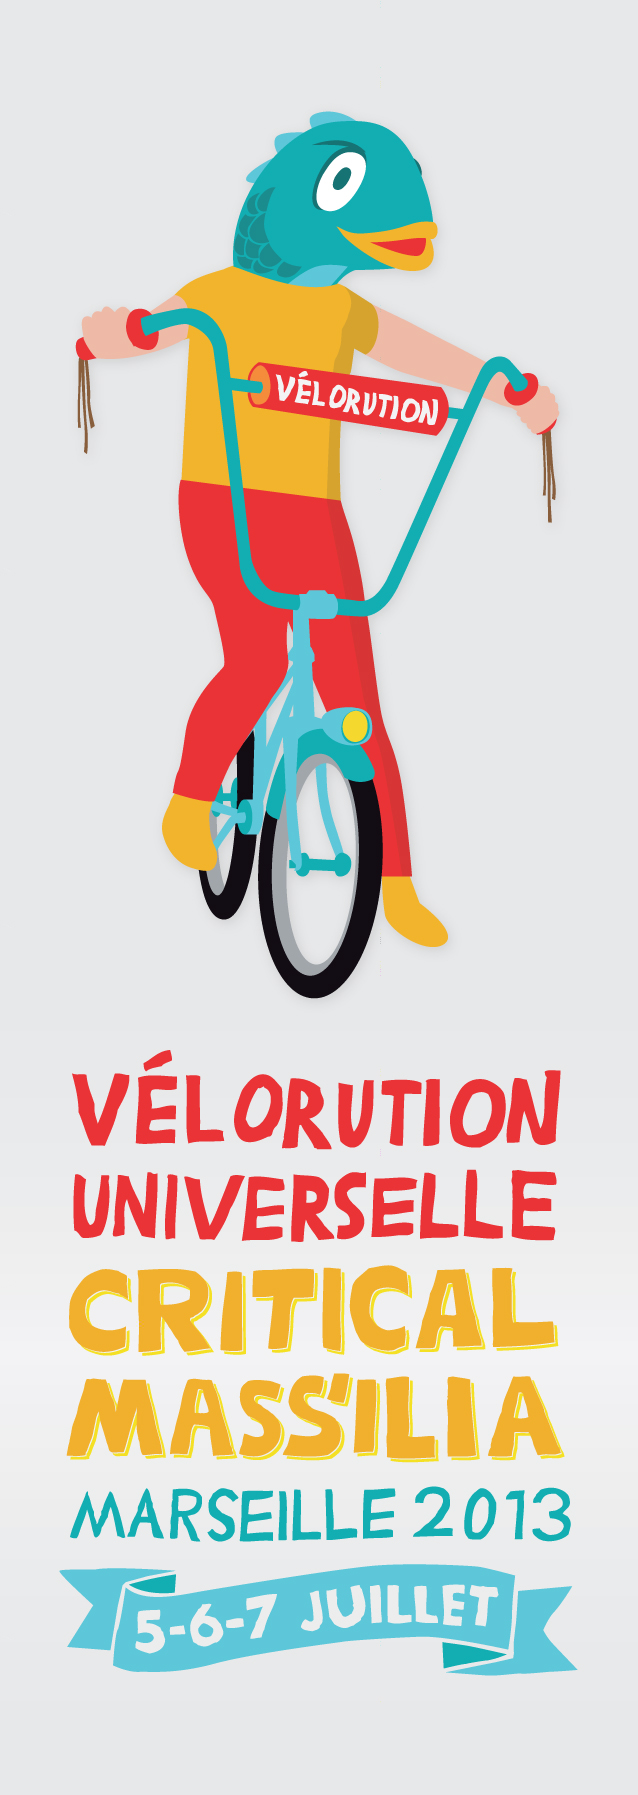 sticker velorution universelle marseille 2013